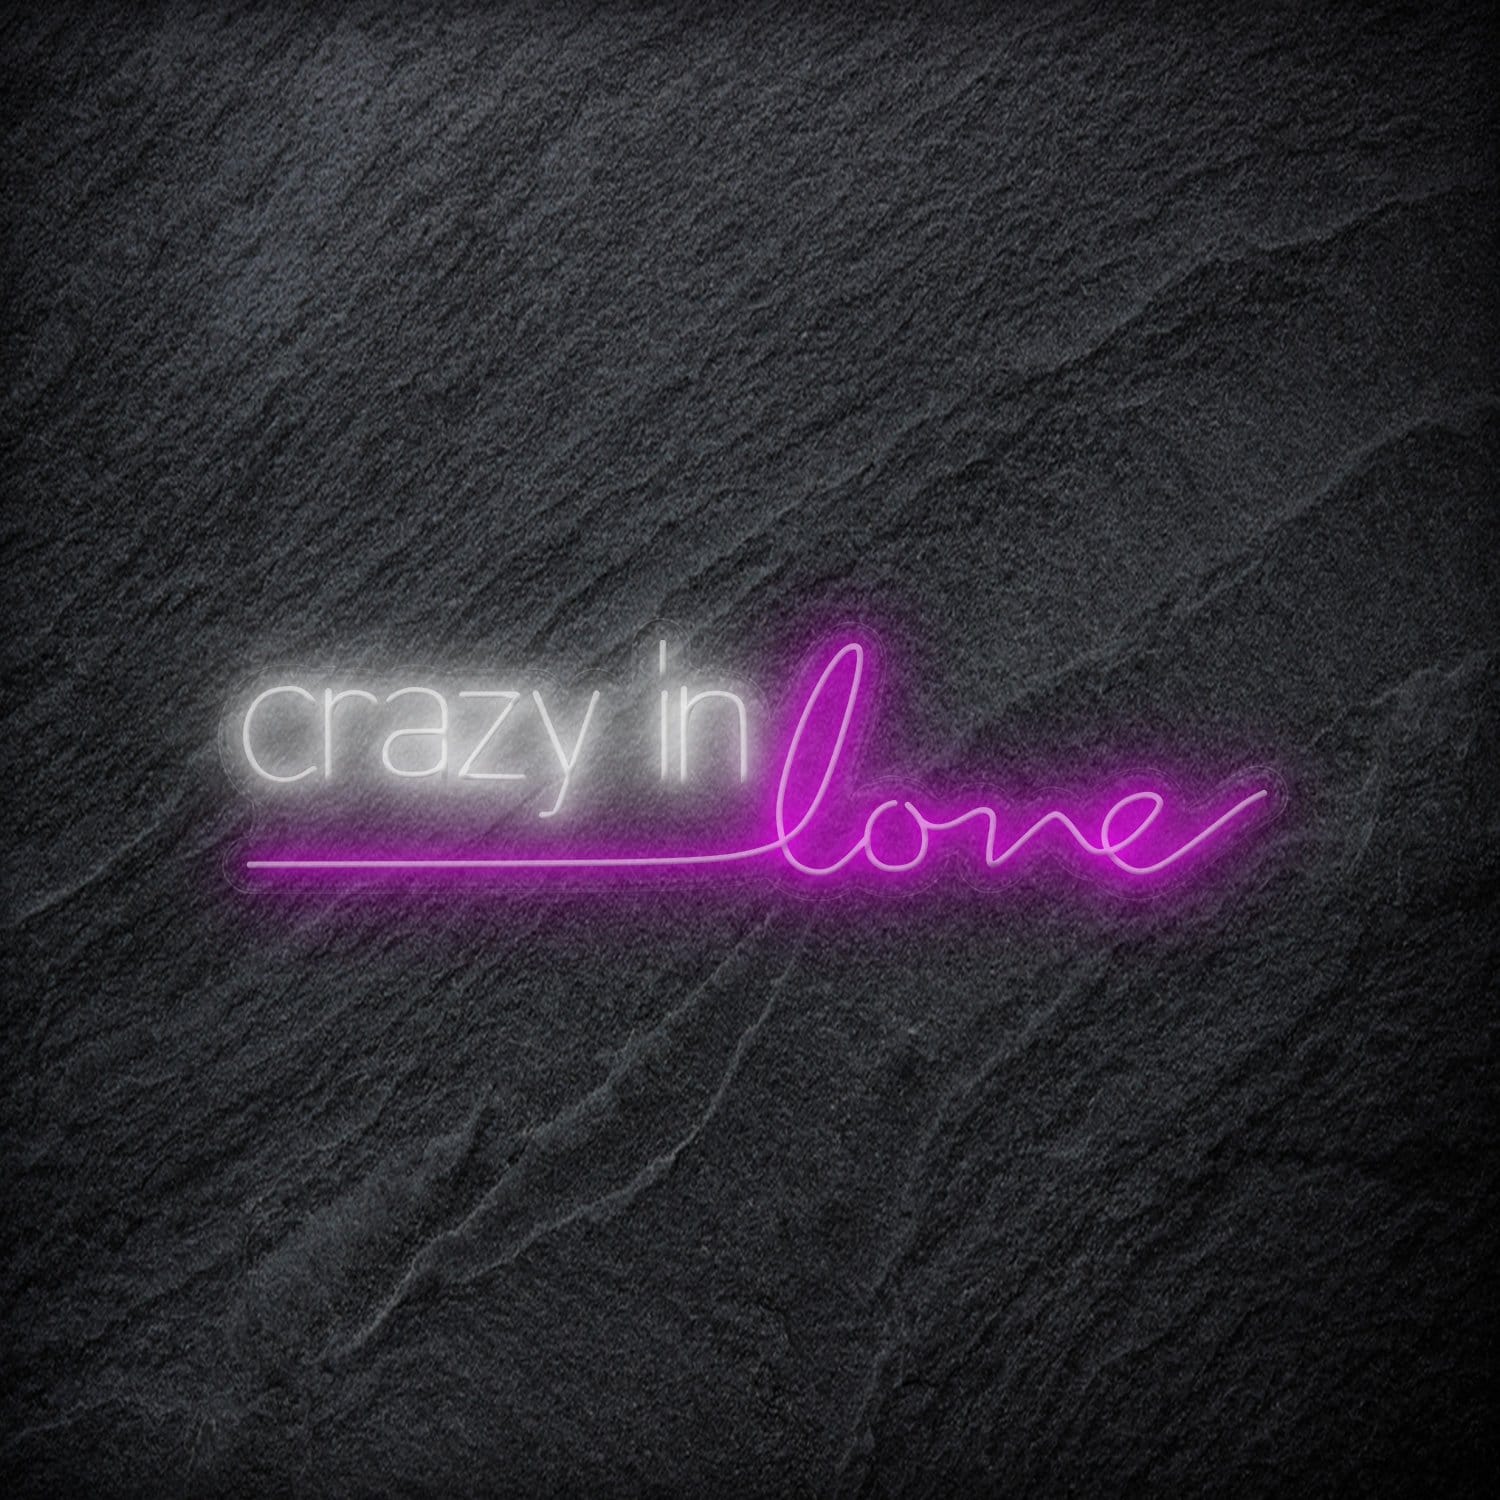 "Crazy In Love" LED Neonschild - NEONEVERGLOW